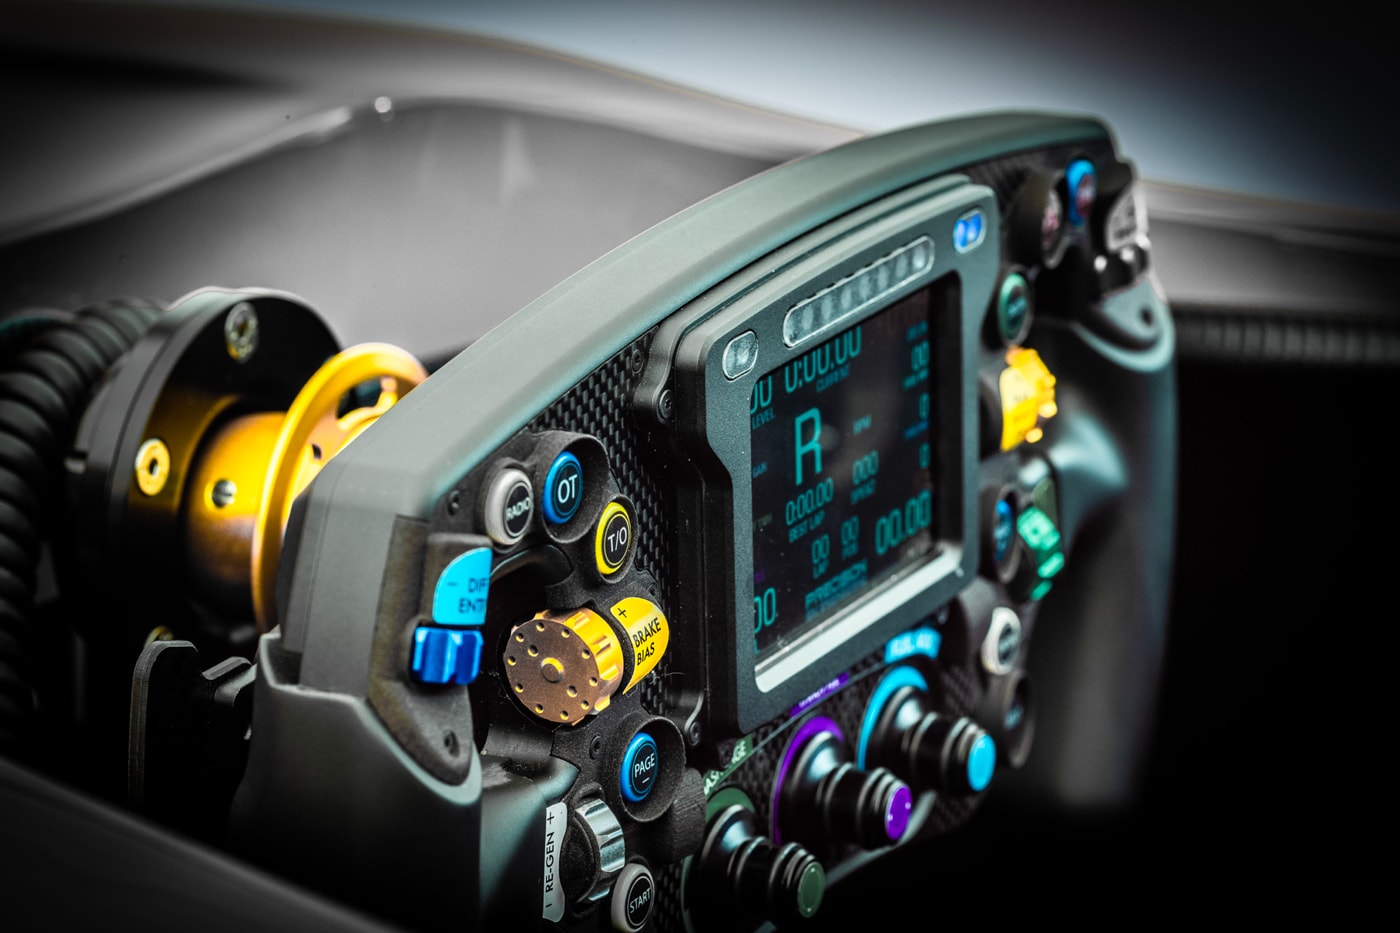 Cranfield Full Motion + G-Force Formula 1 Simulator info racing tech games luxury racing home Britain cockpit Ferrari McLaren 